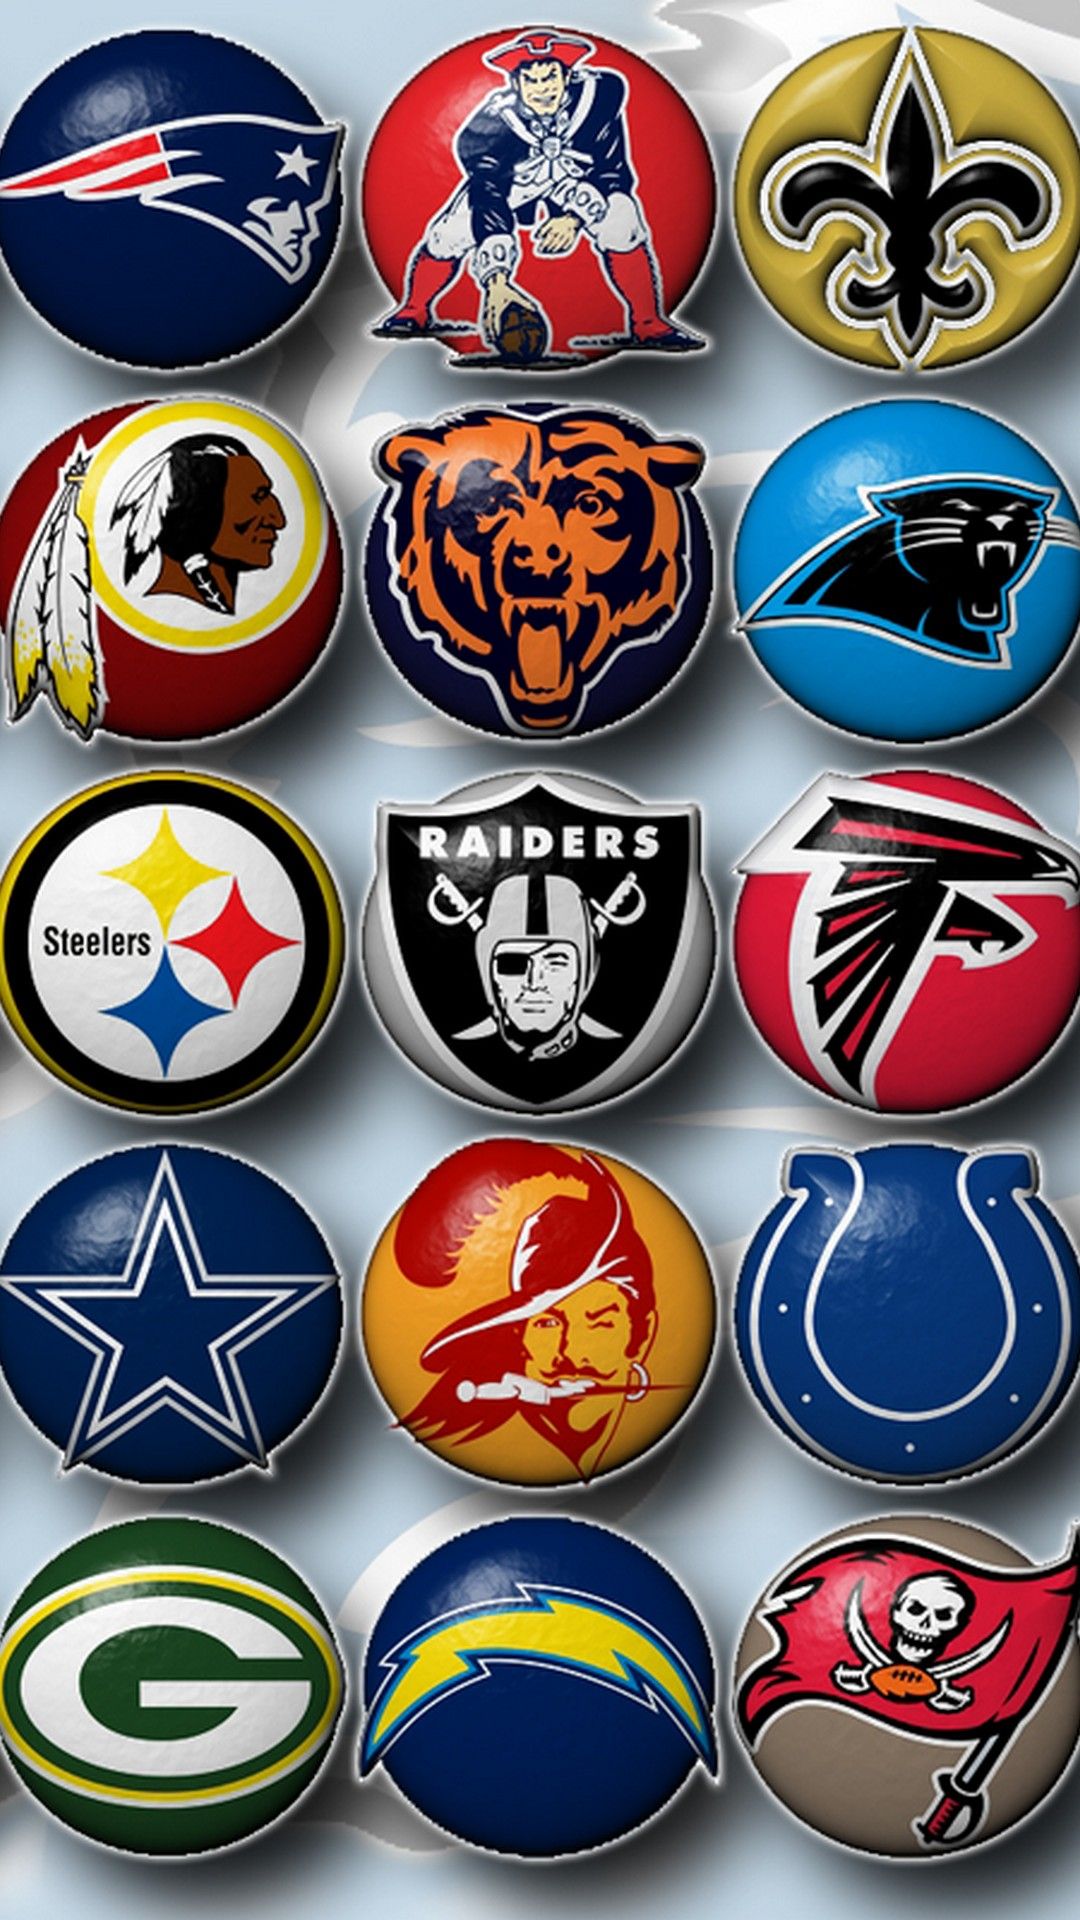 NFL Wallpaper iPhone HD NFL Football Wallpaper. Nfl football wallpaper, Oakland raiders logo, Nfl